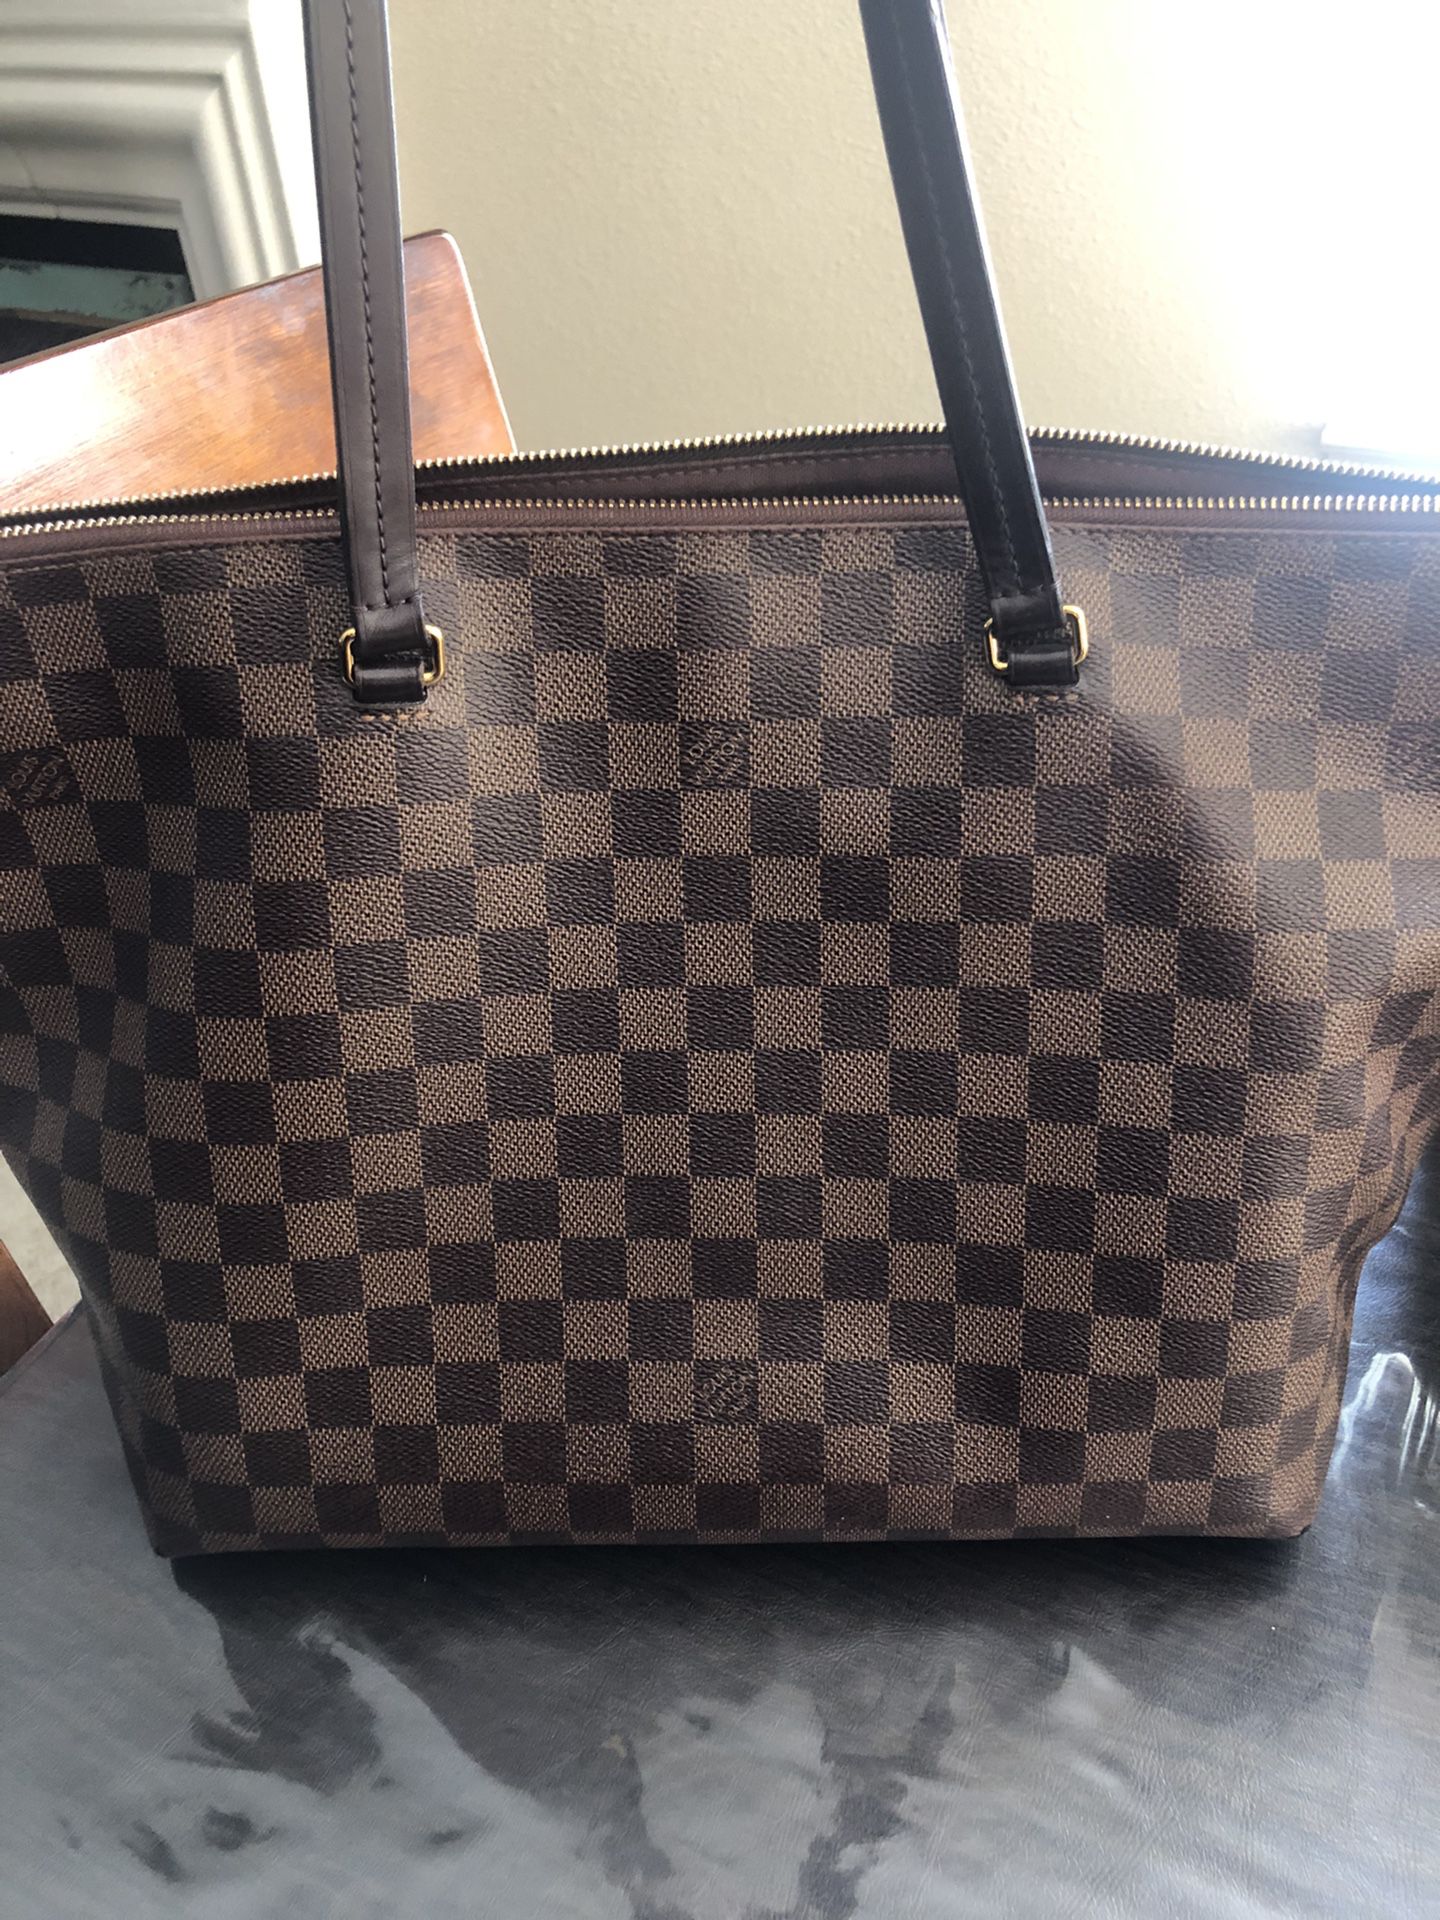 Louis Vuitton hand bag for sale - Handbags - Bags - Wallets